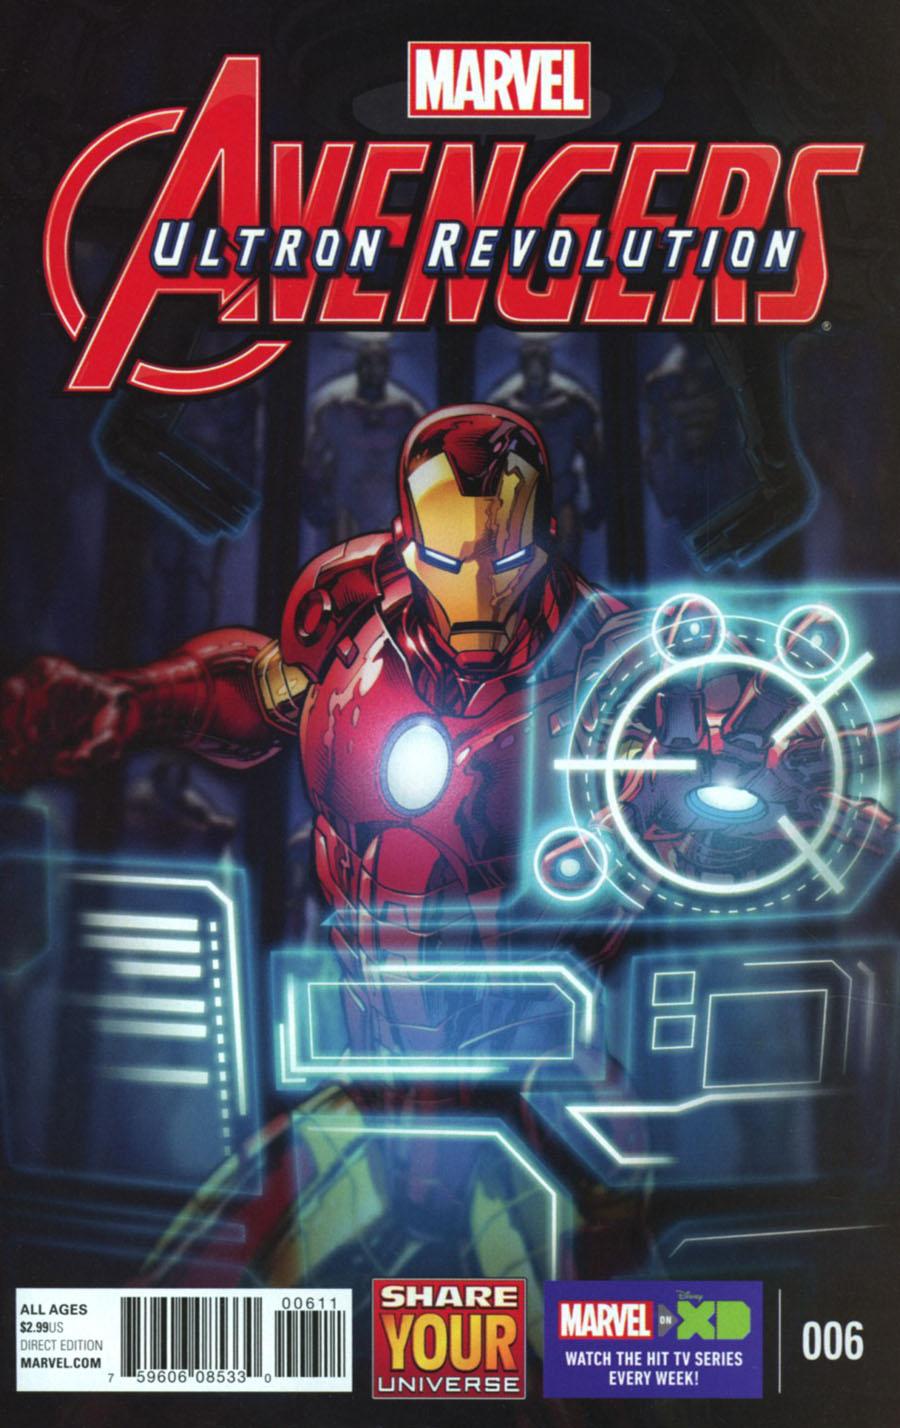 Marvel Universe Avengers Ultron Revolution Vol. 1 #6